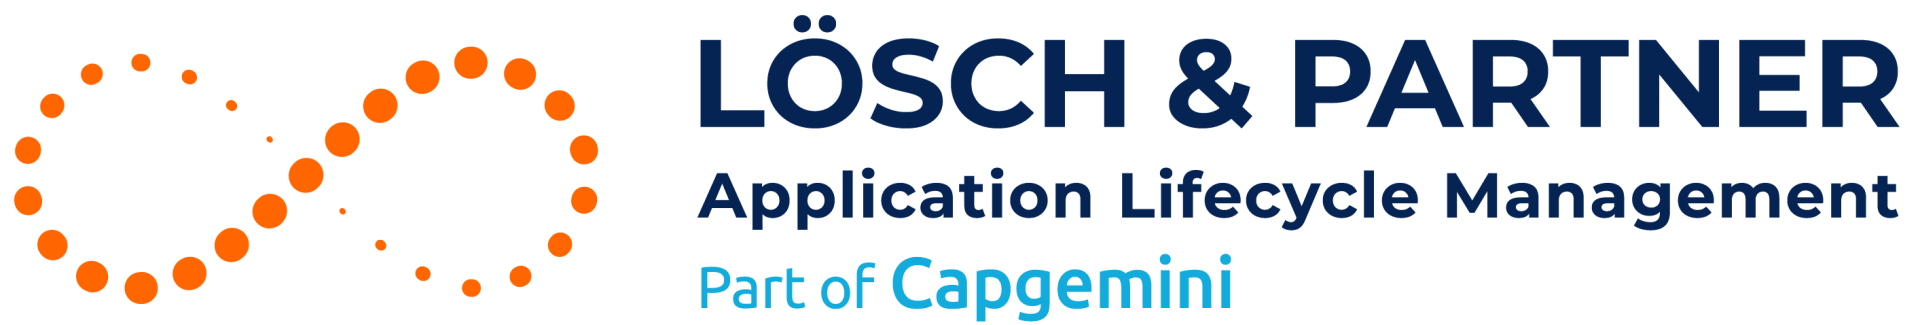 Lösch & Partner - Part of Capgemini logo